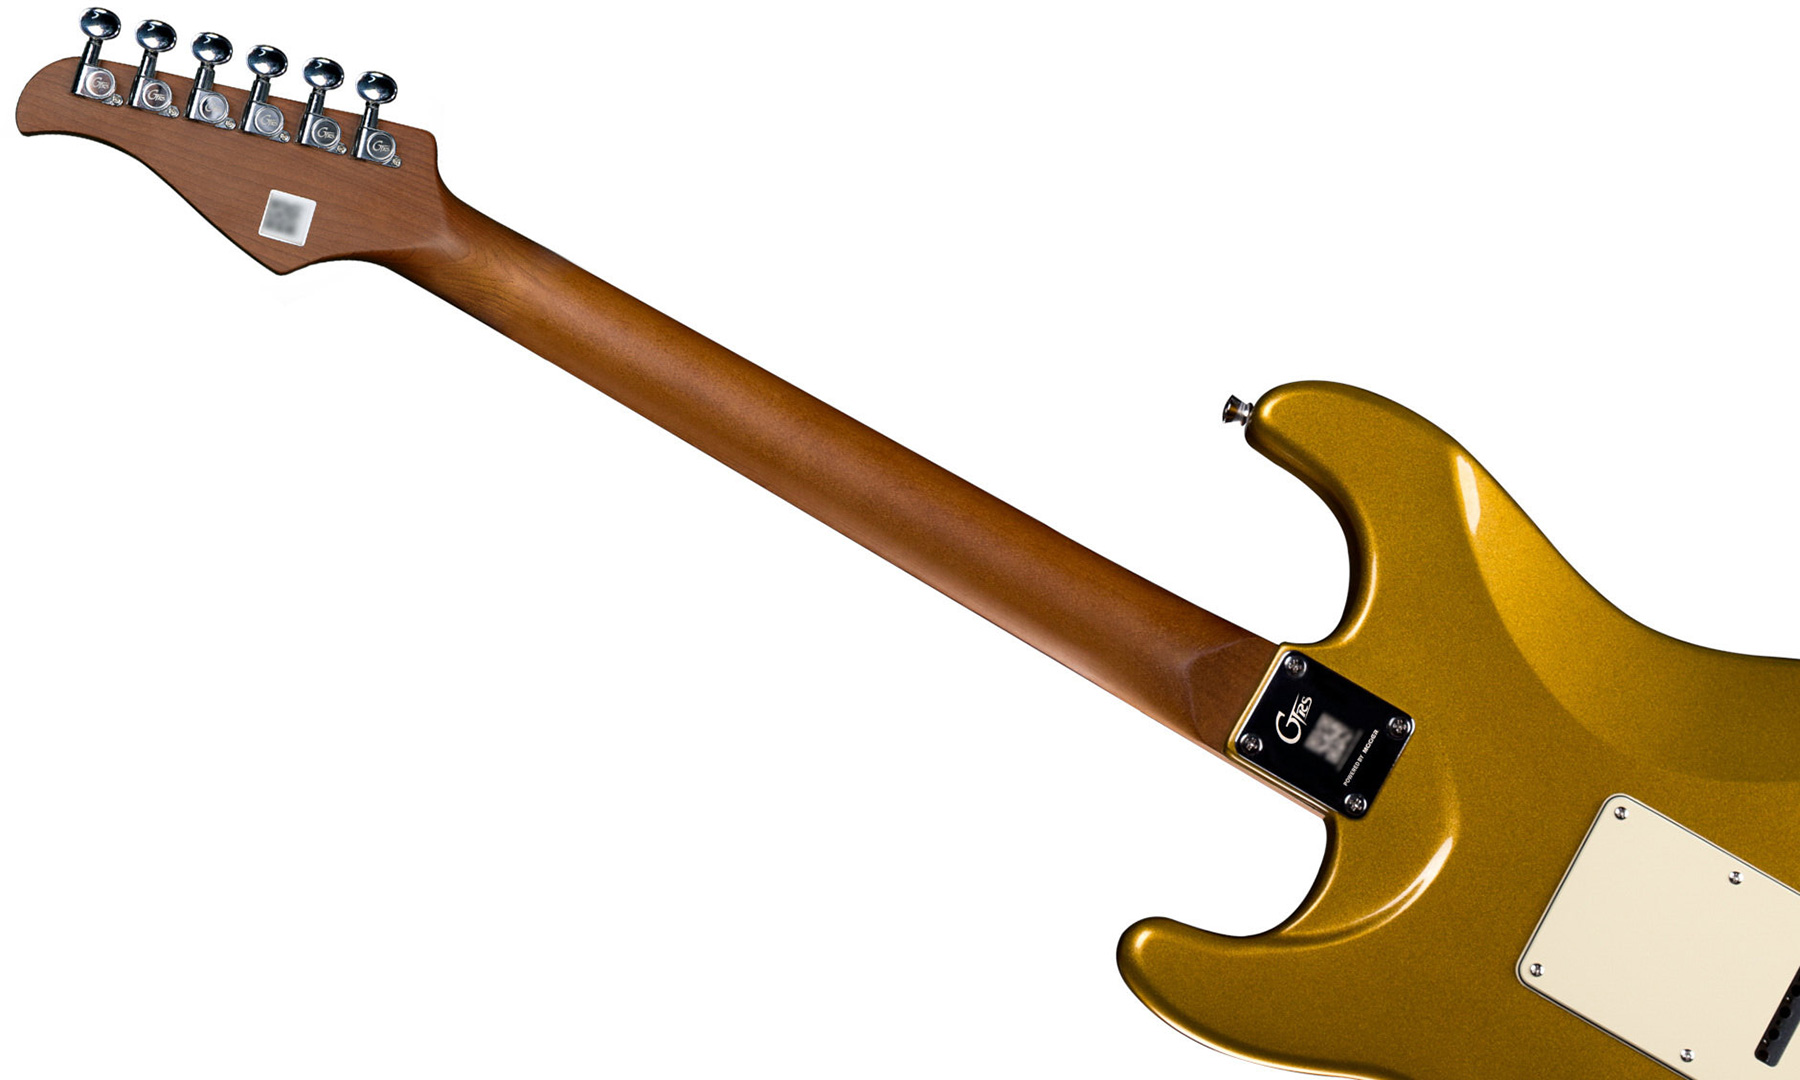 Mooer Gtrs S800 Hss Trem Rw - Gold - Modeling guitar - Variation 3